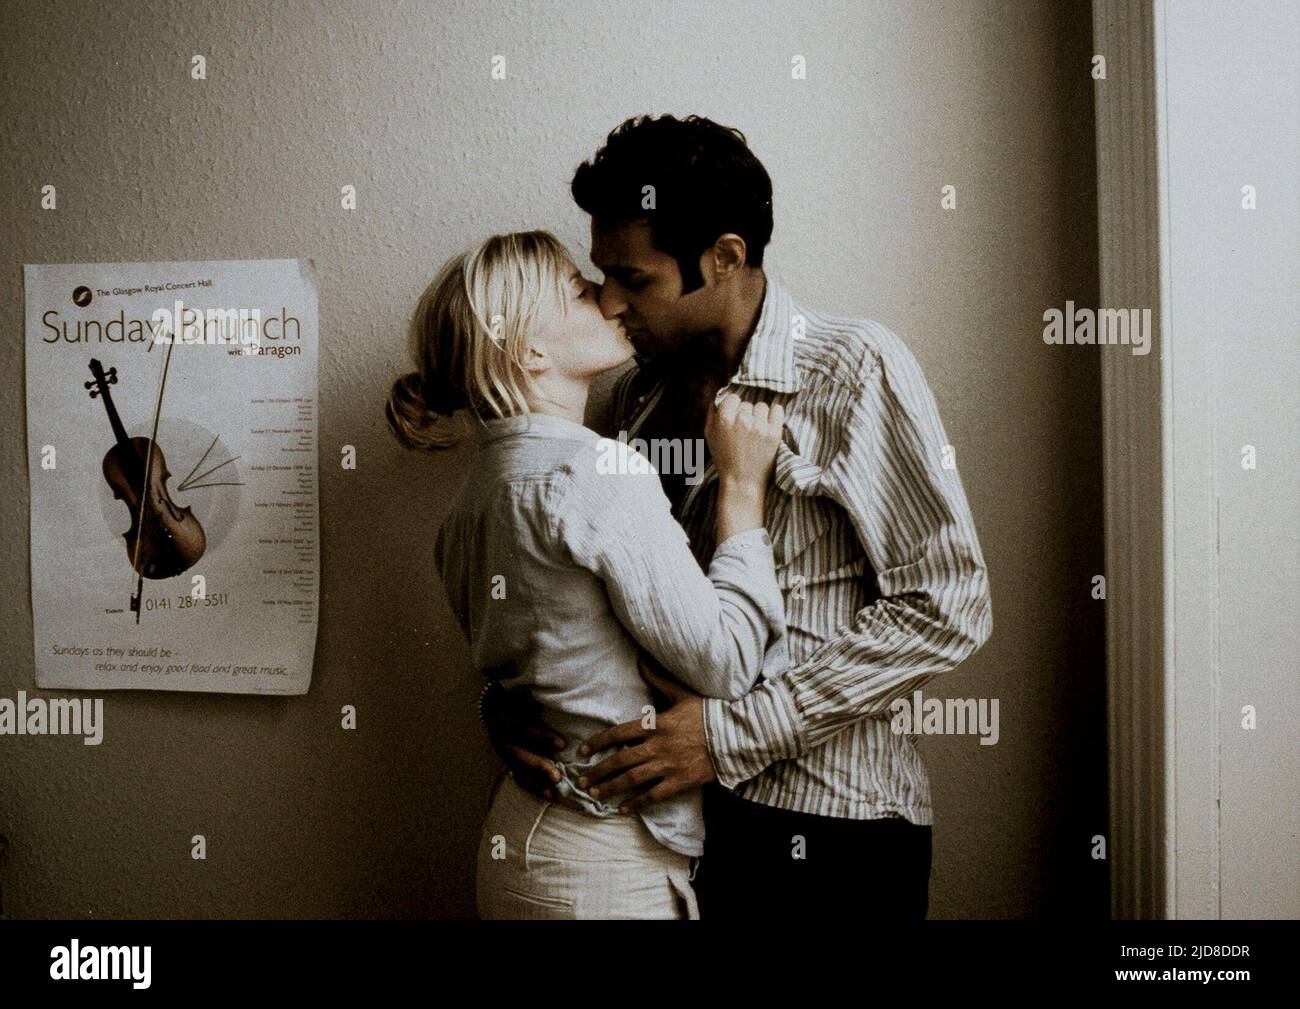 YAQUB,BIRTHISTLE, AE FOND KISS..., 2004, Stock Photo